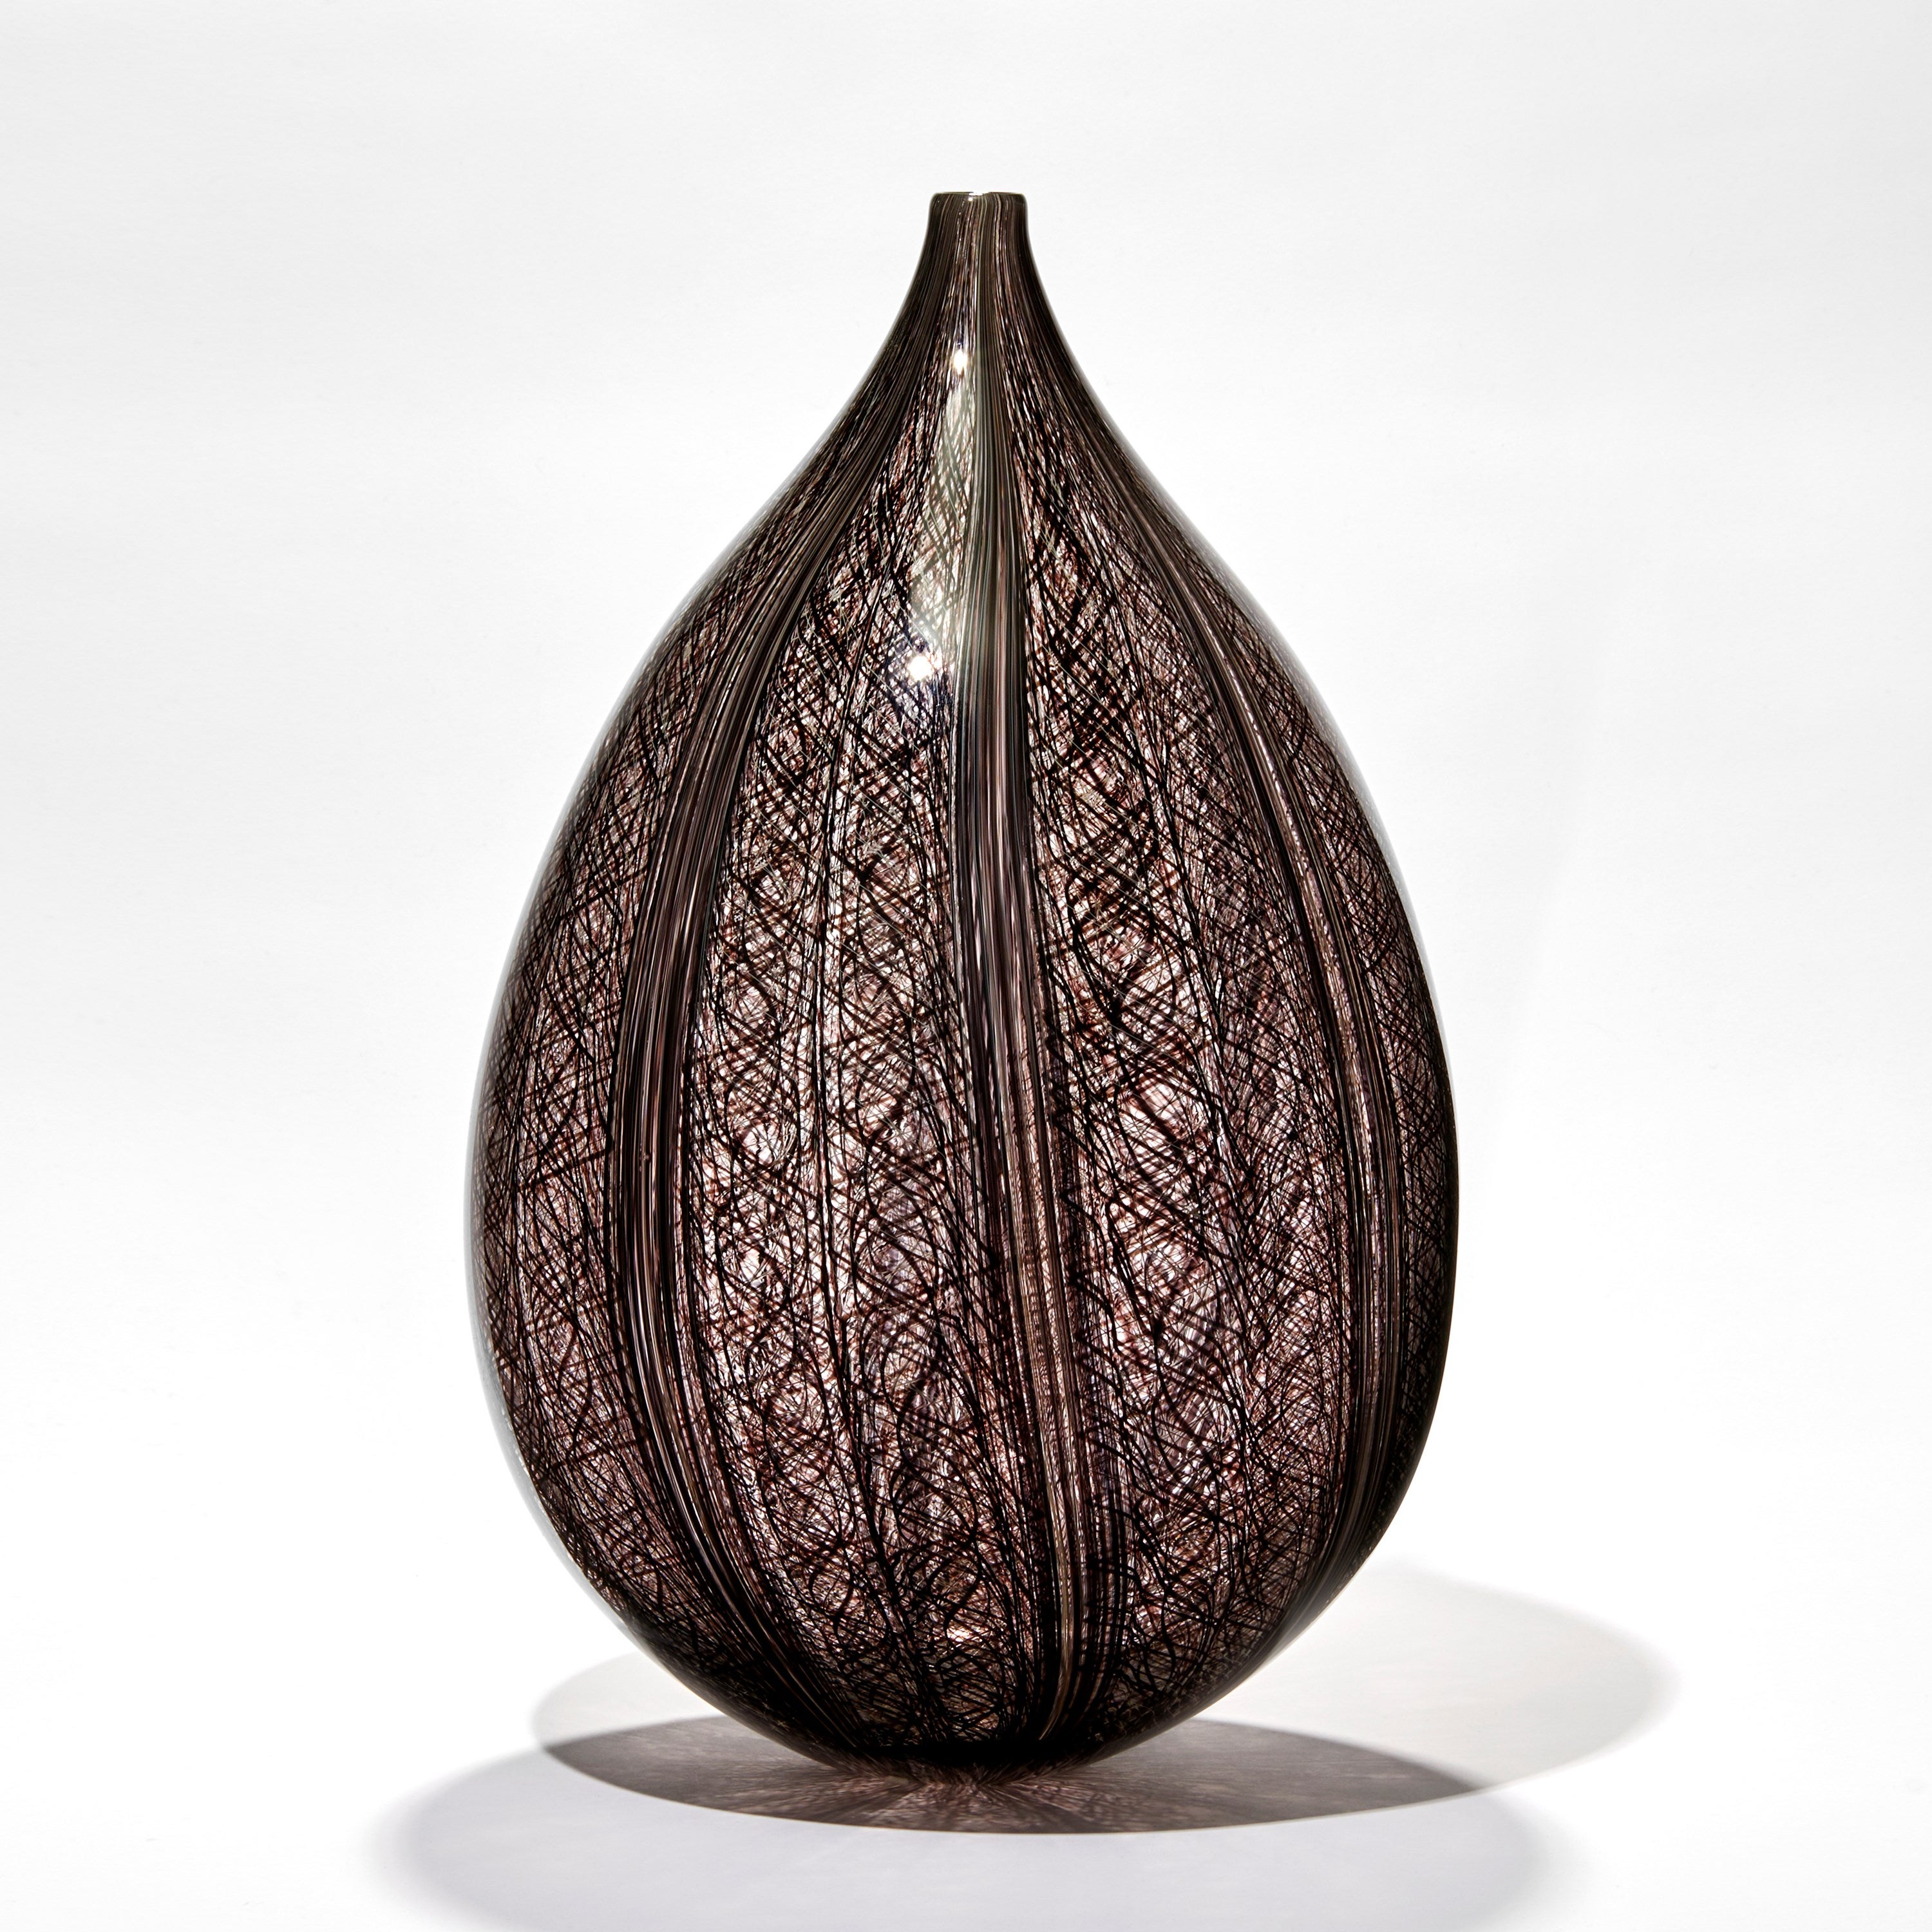 Threads IV, a unique clear & aubergine Glass blown Sculpture by Ann Wåhlström For Sale